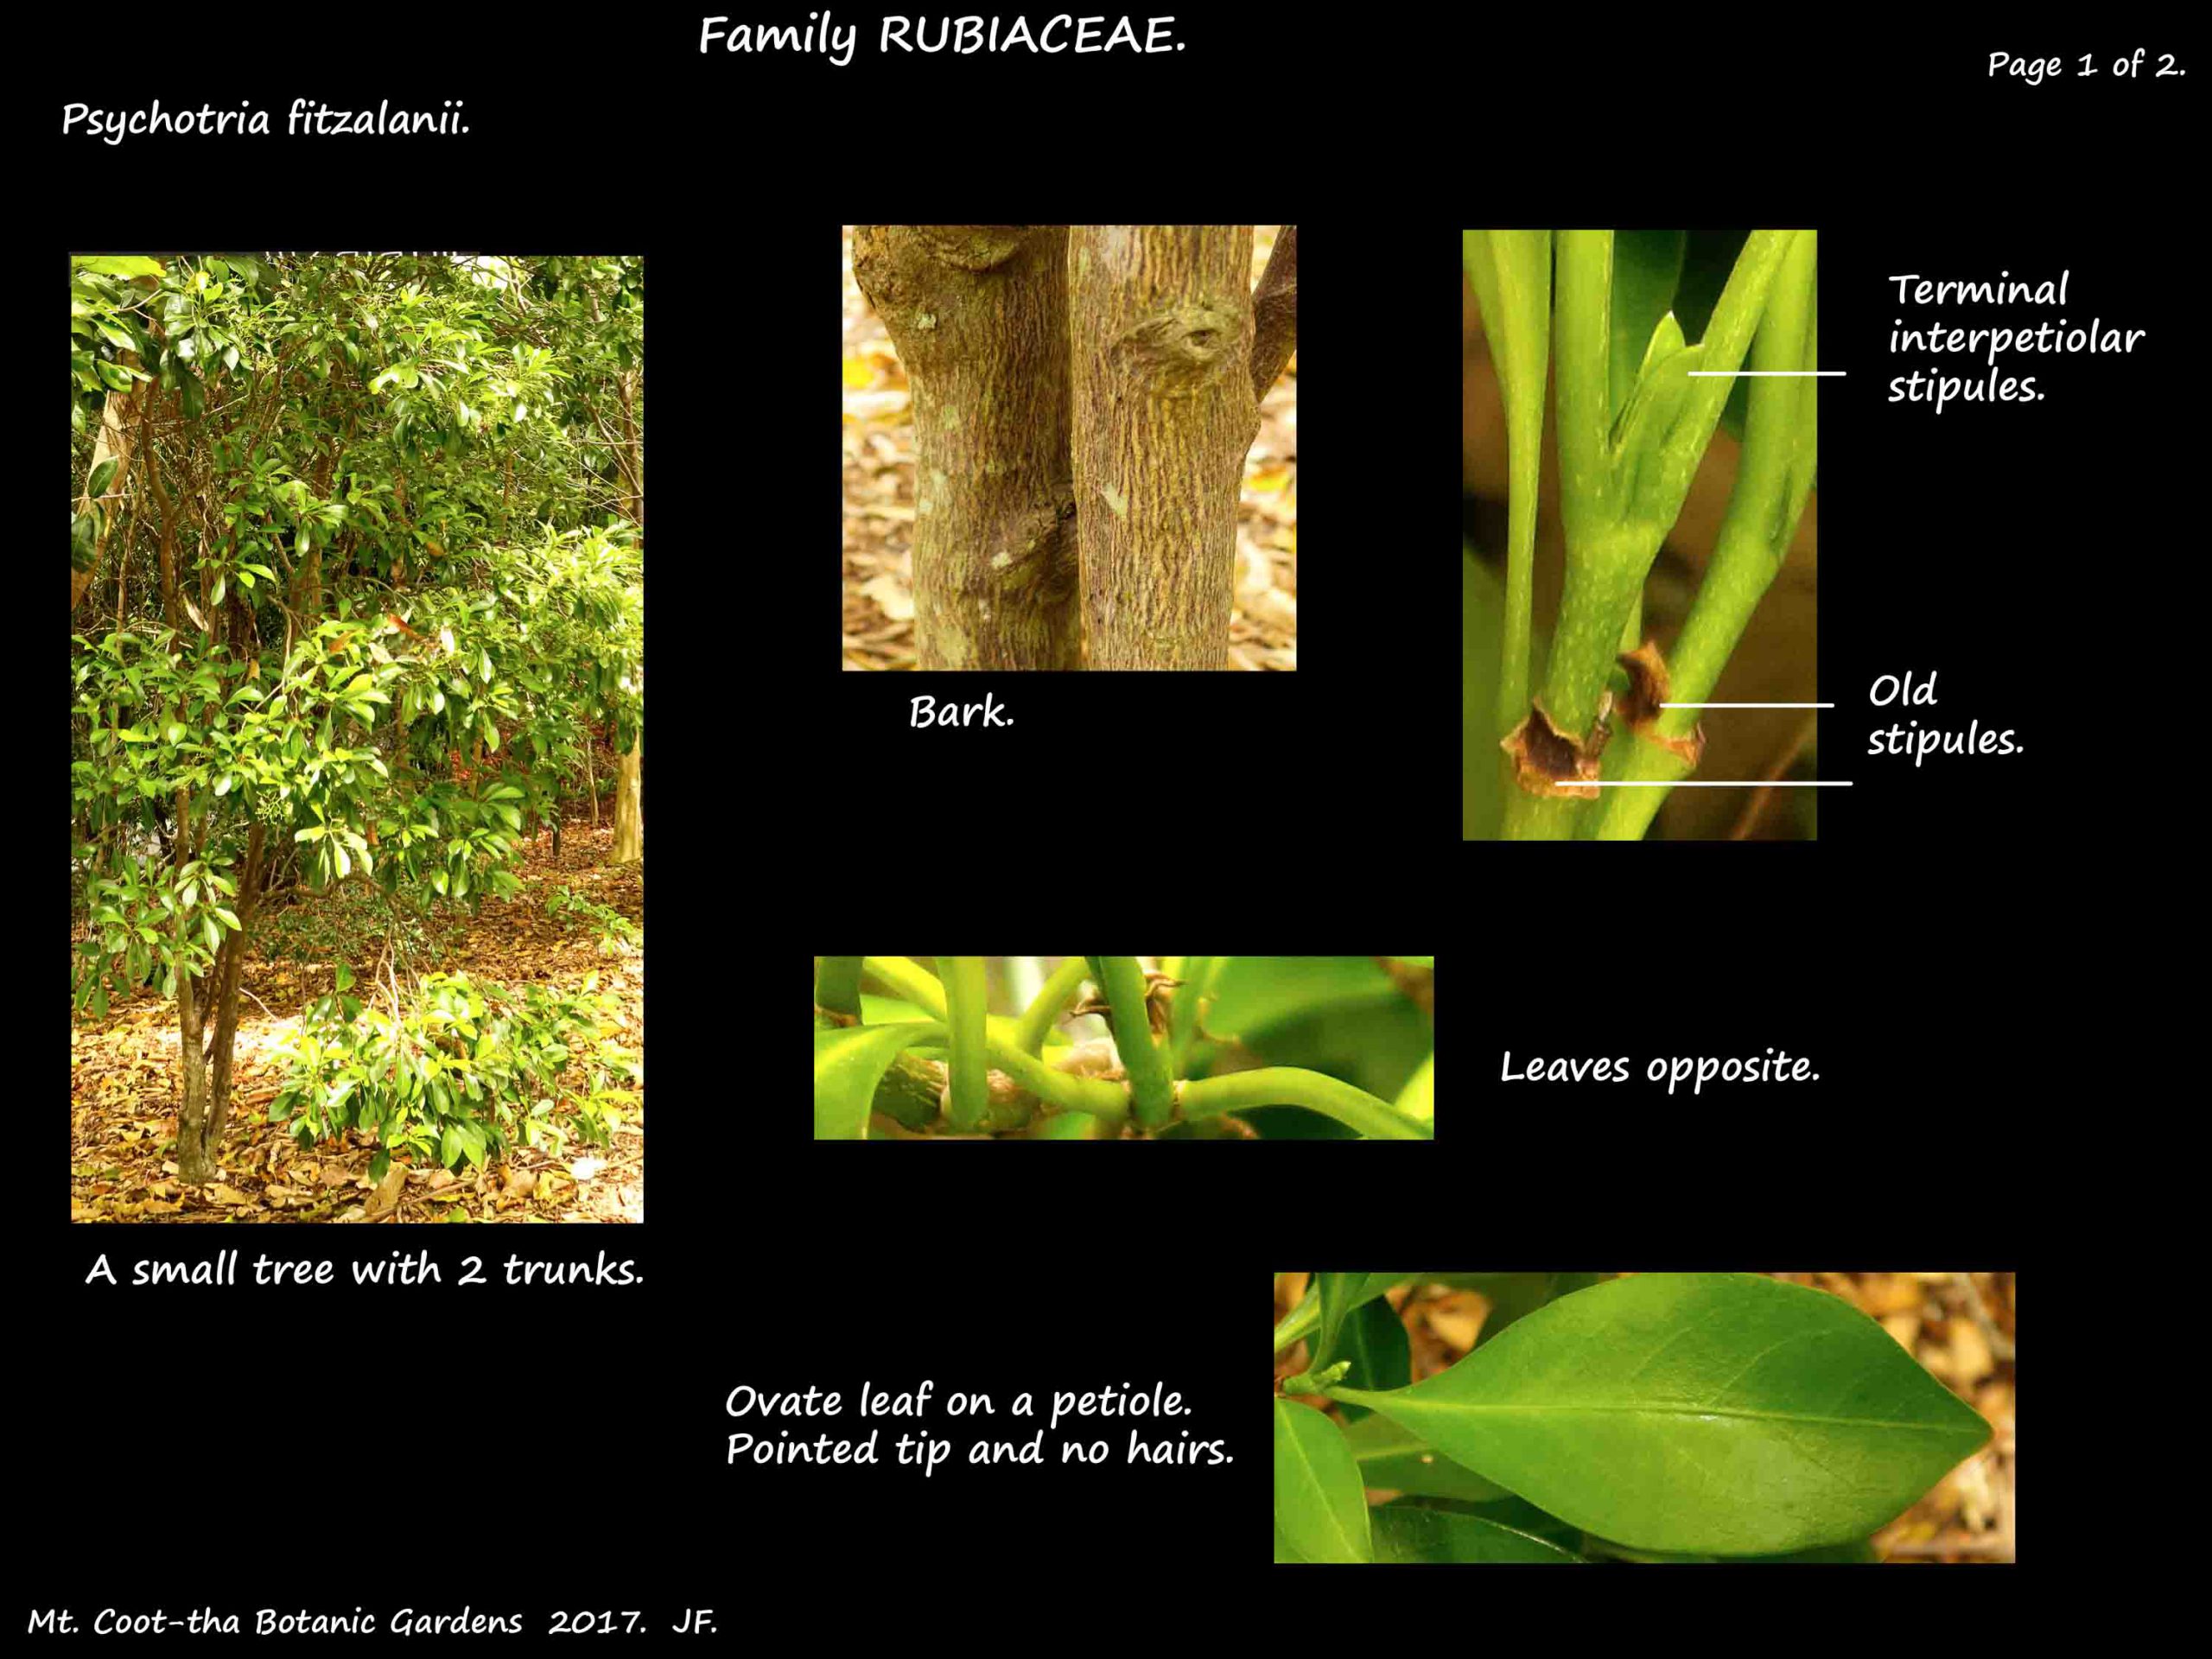 1 Psychotria fitzalanii tree & leaf